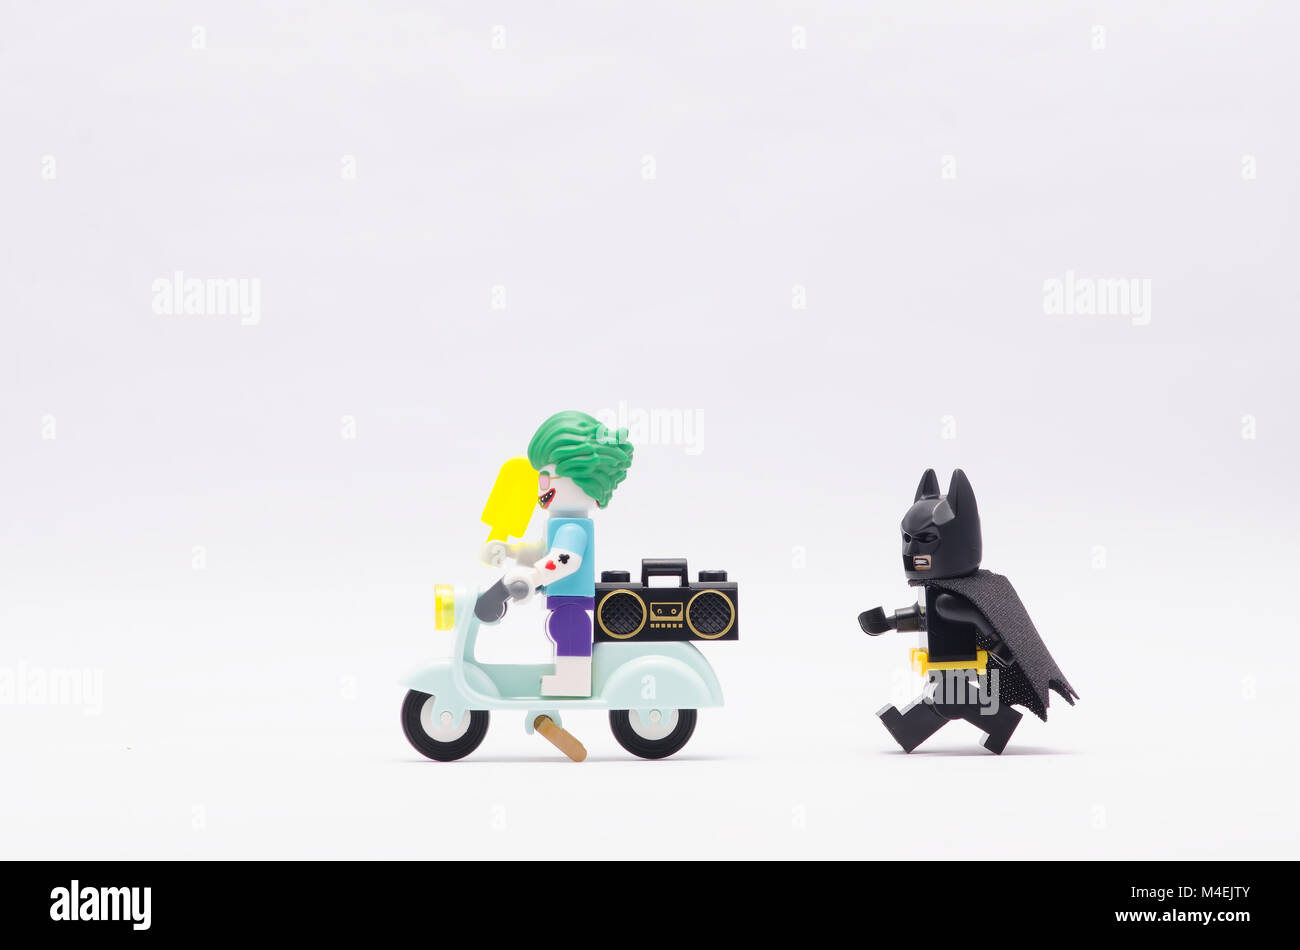 lego batman chasing joker riding a scooter. isolated on white background  Stock Photo - Alamy